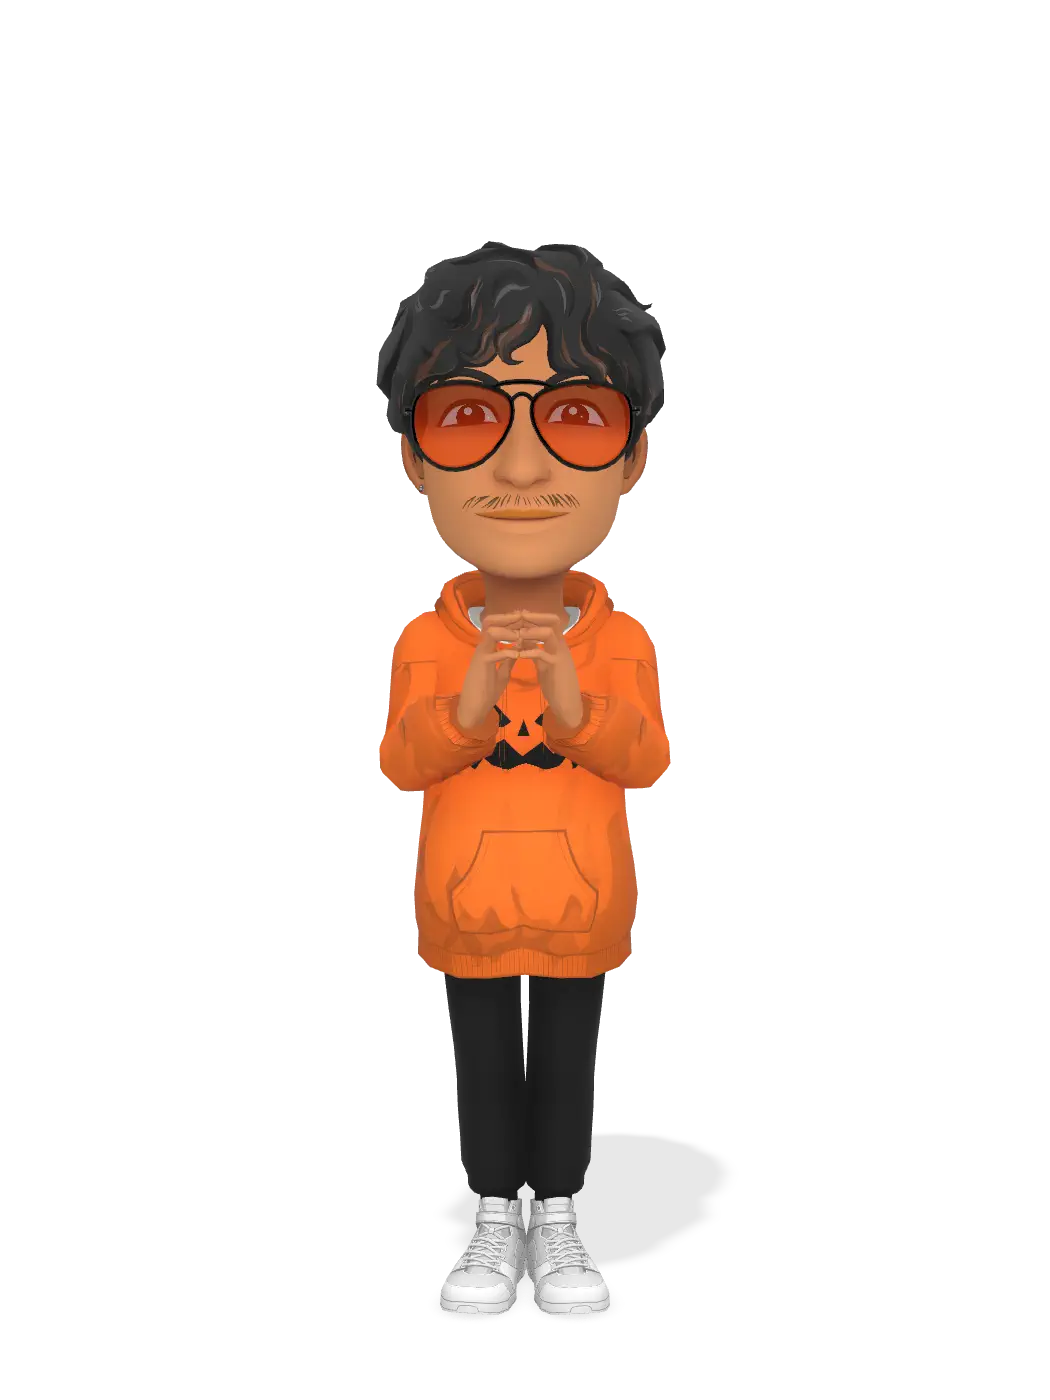 3D Bitmoji for praveen-prasad avatar